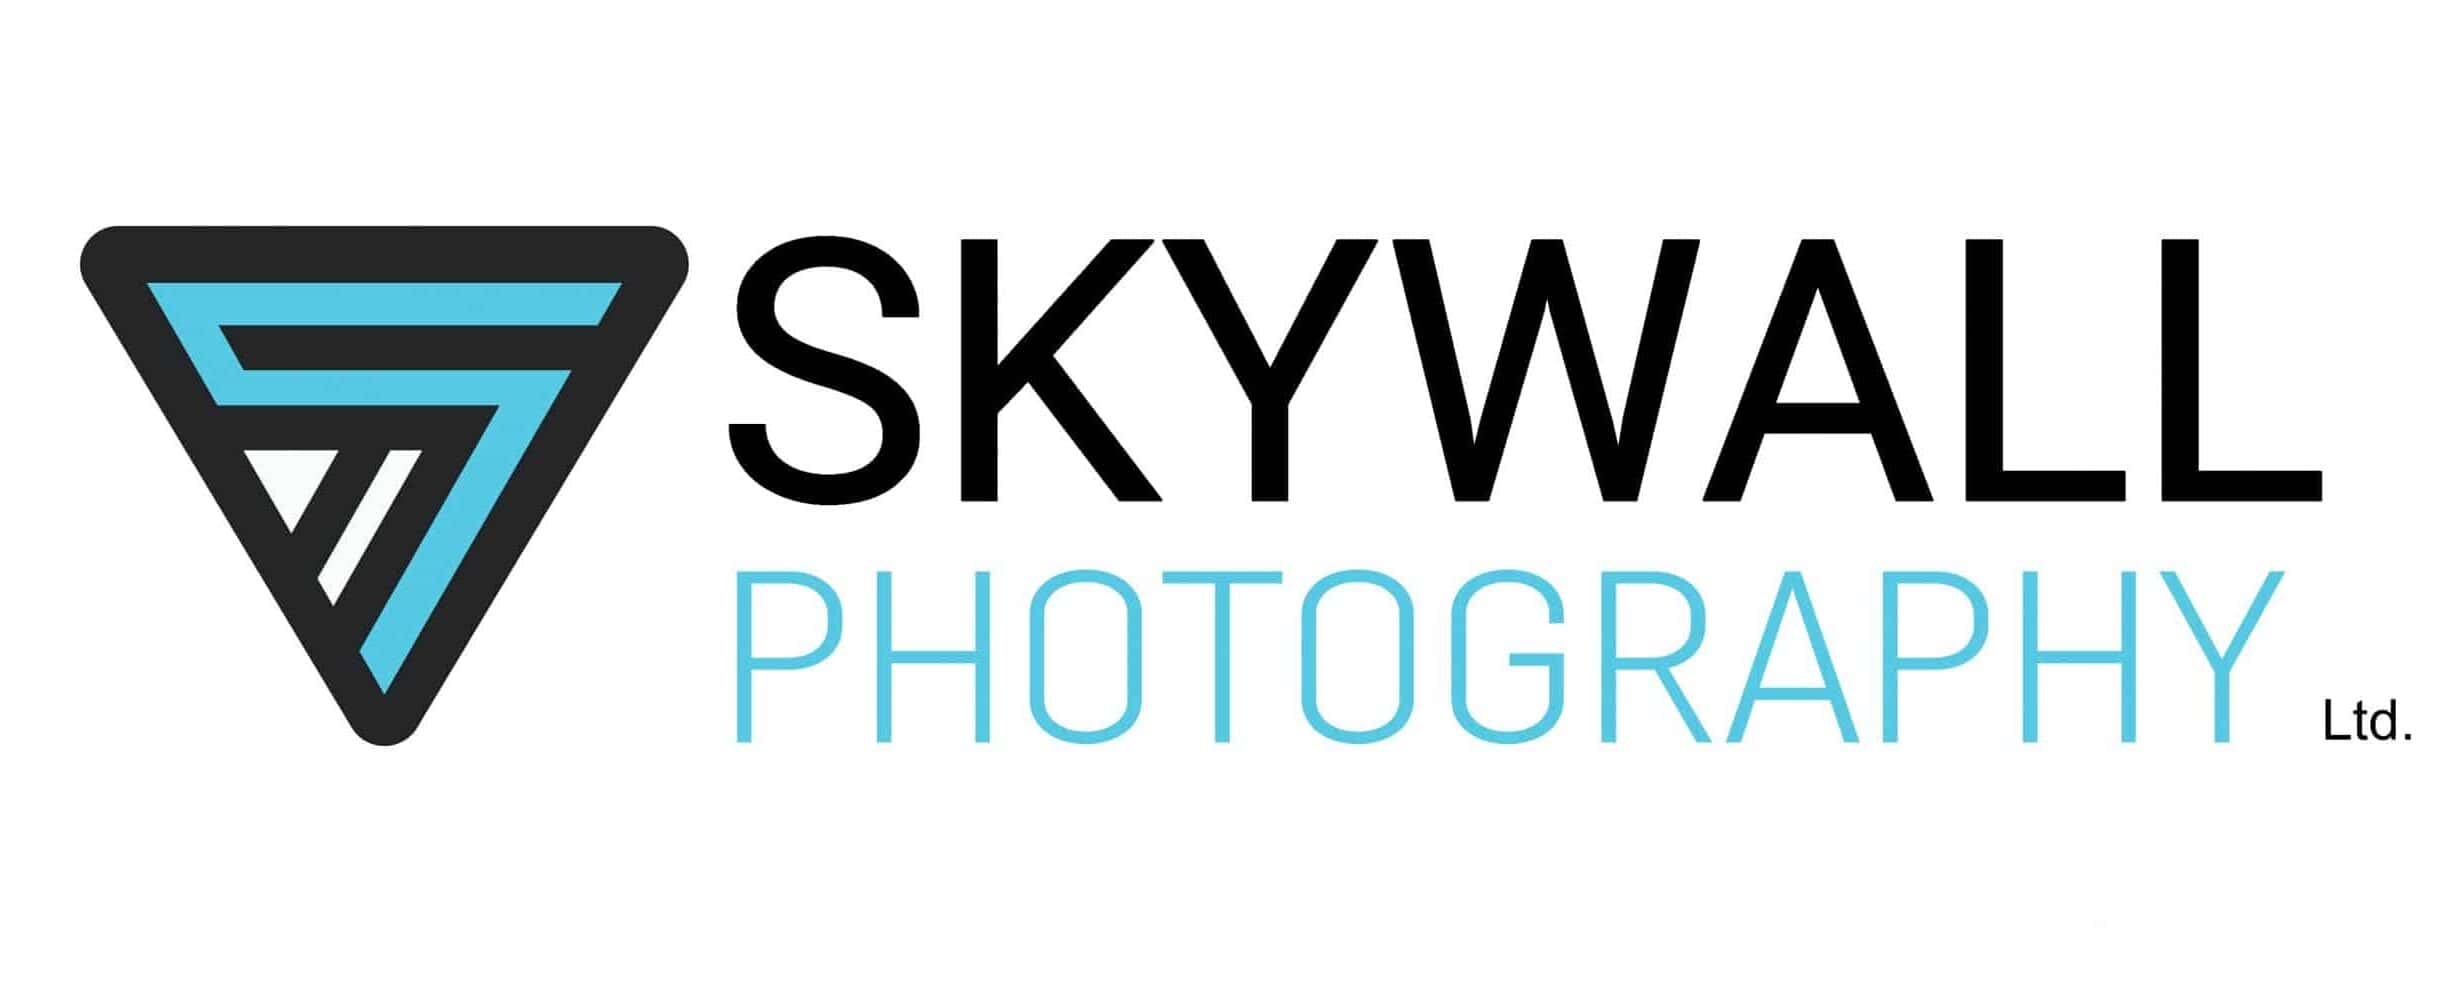 Skywall photography logo.